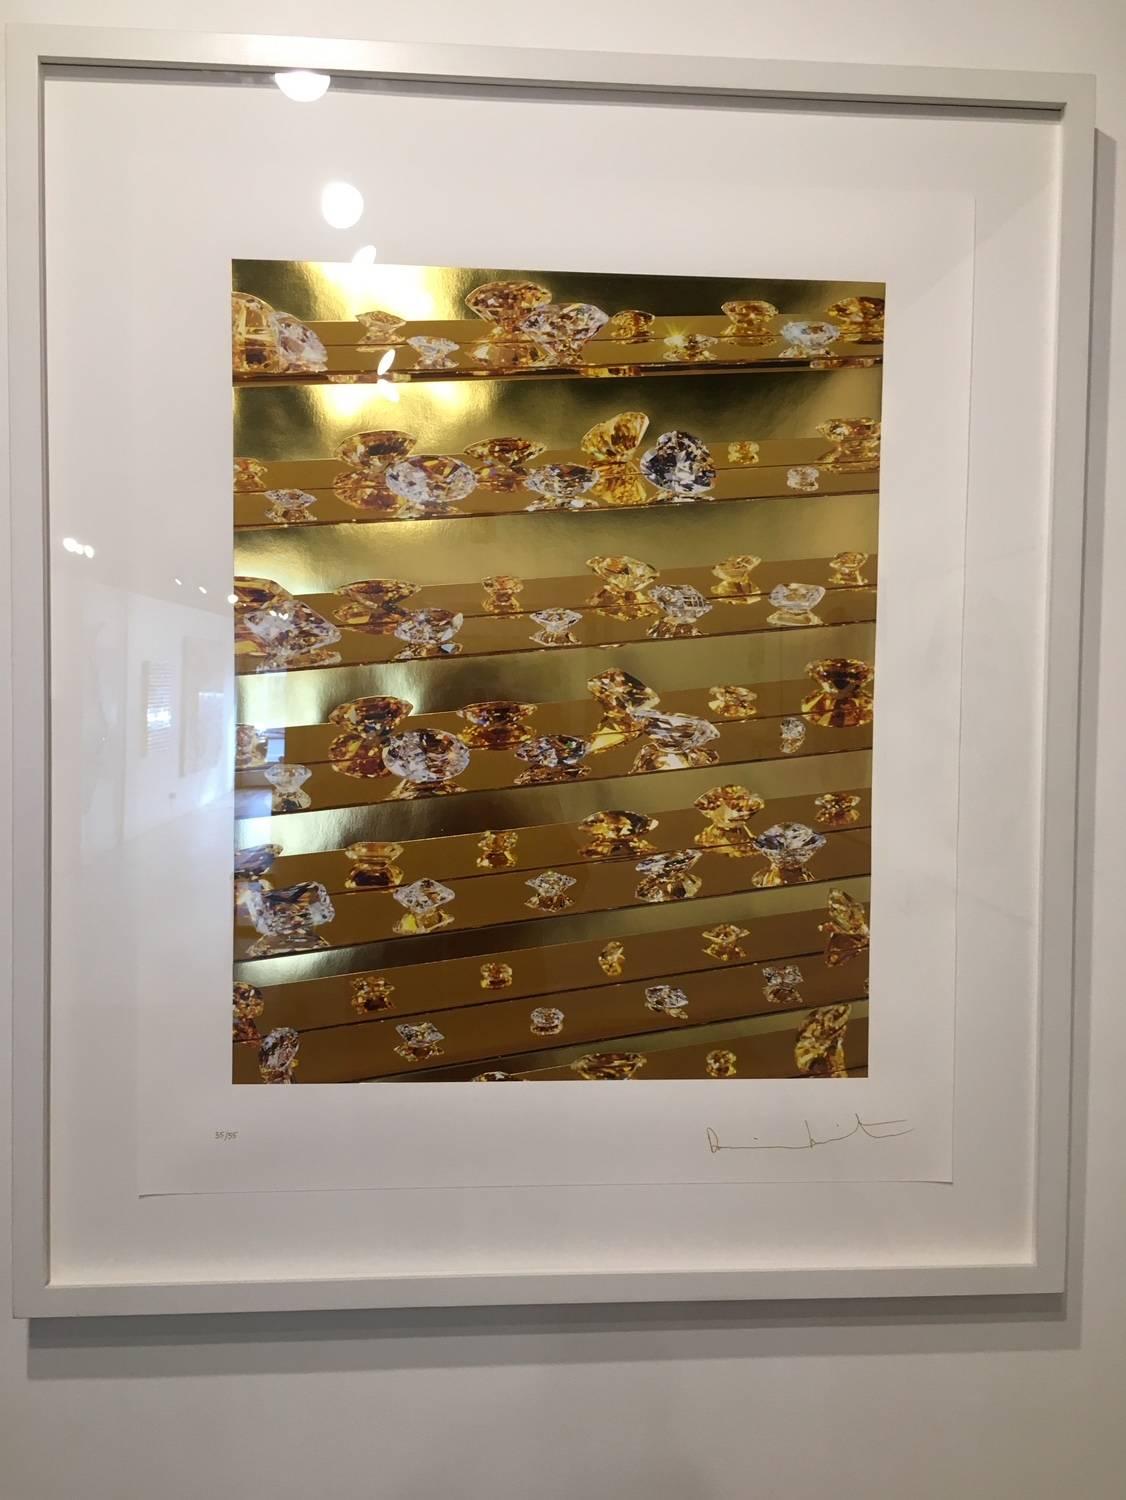 Artist:  Hirst, Damien
Title:  Gold Tears
Date:  2012
Medium:  Inkjet, glaze and foilblock on Hahnemuhle photo rag ultra smooth 305gsm paper
Unframed Dimensions:  34